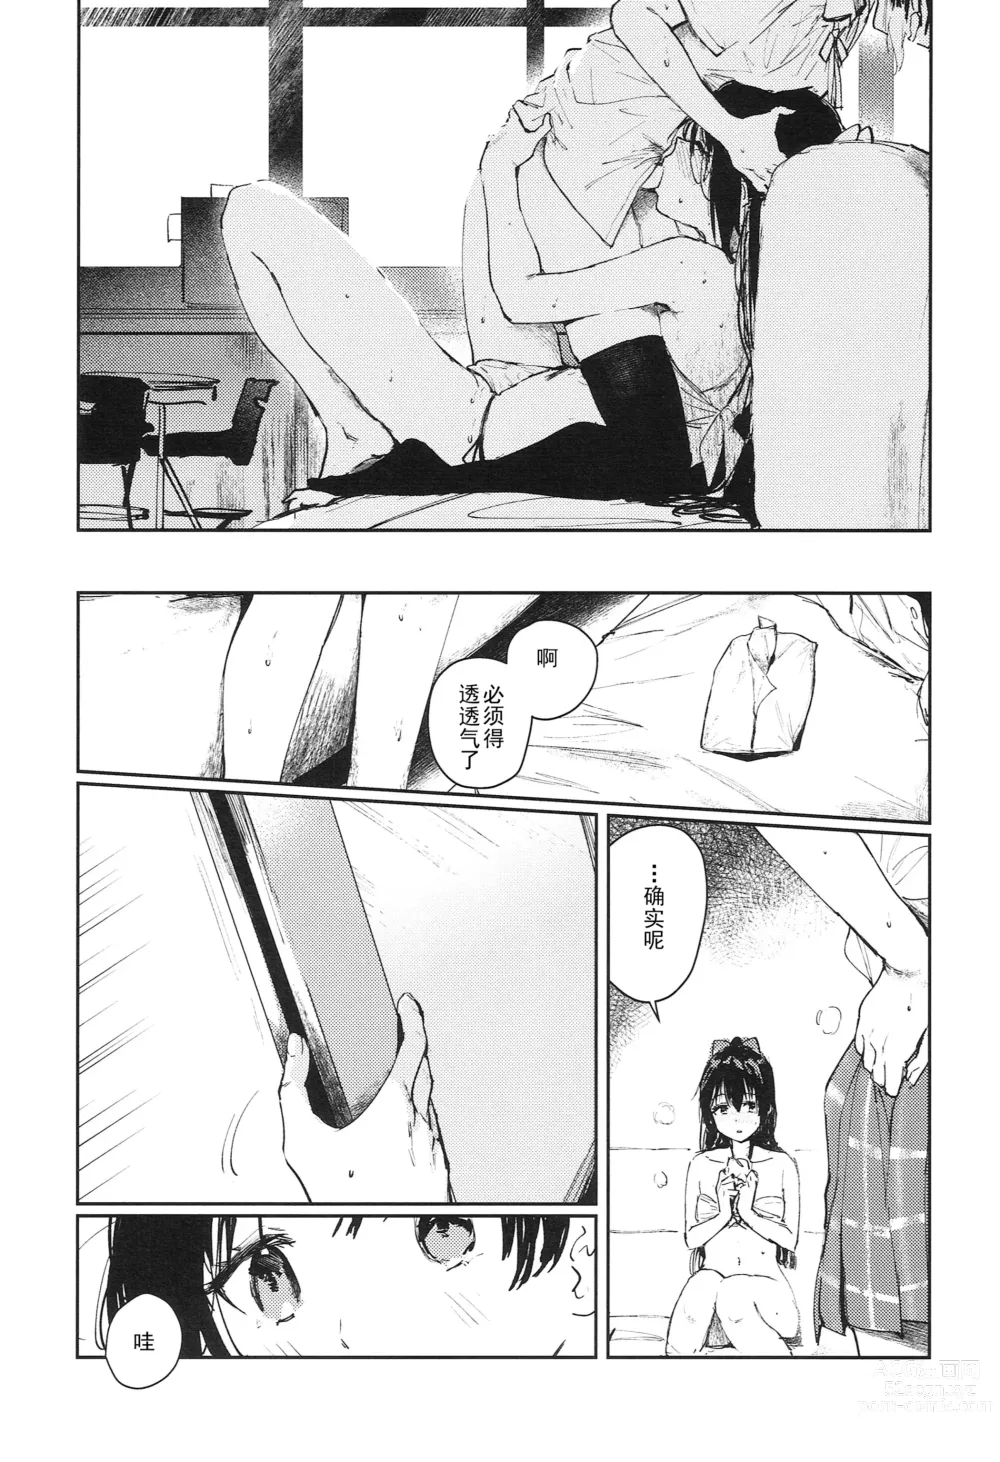 Page 25 of doujinshi Aoku Iroasero